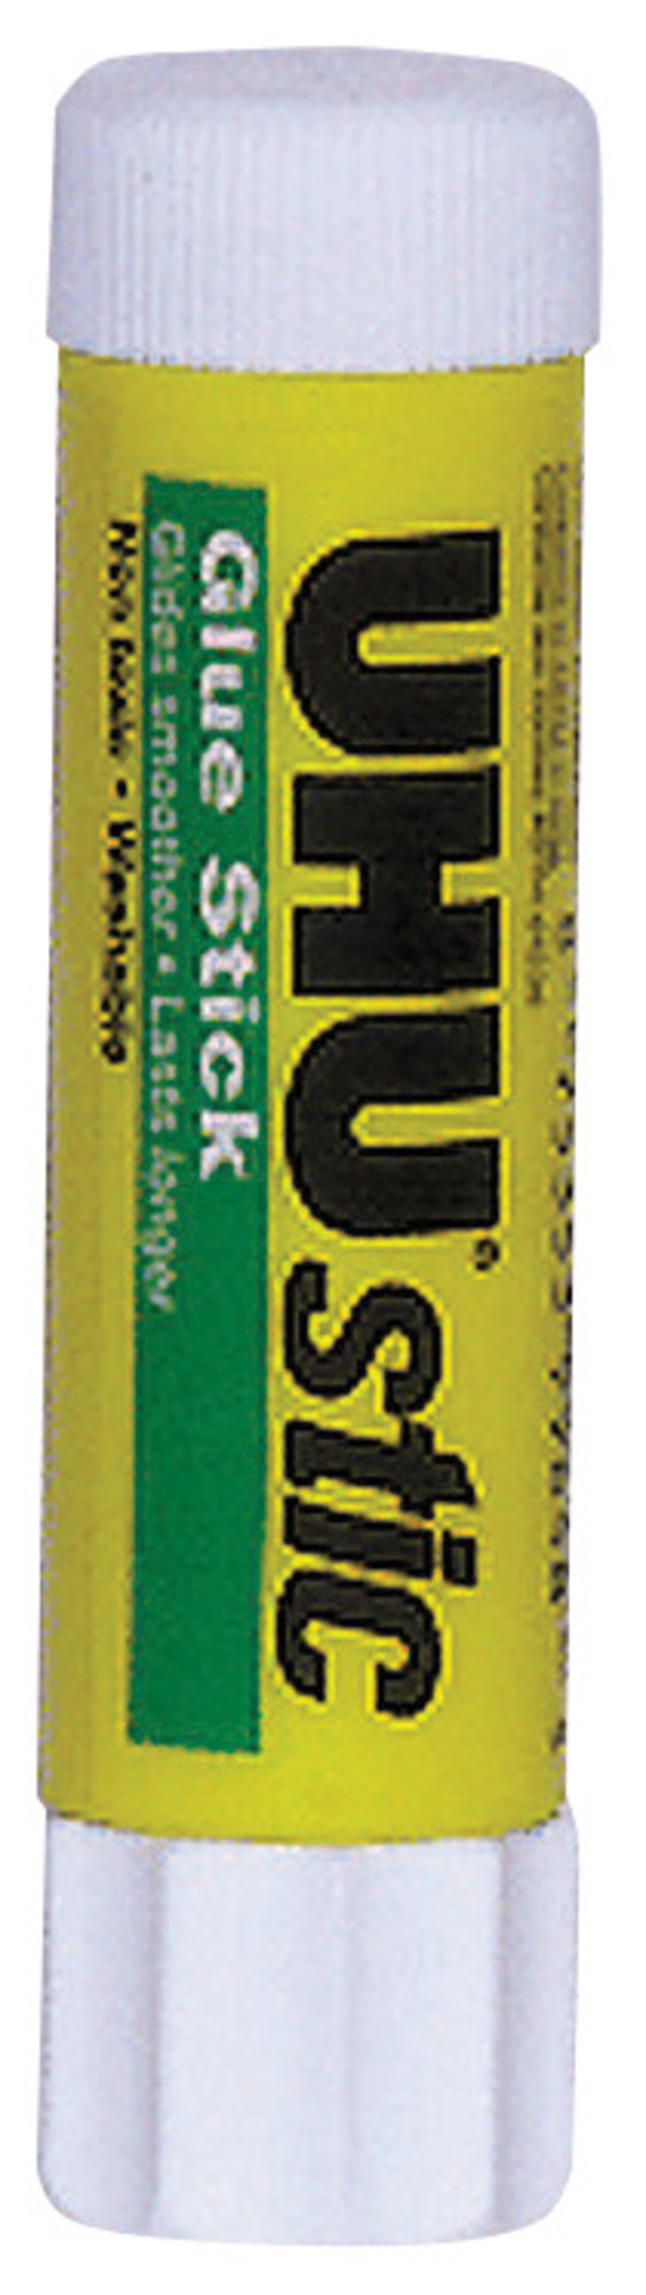 Glue Sticks, Item Number 020867